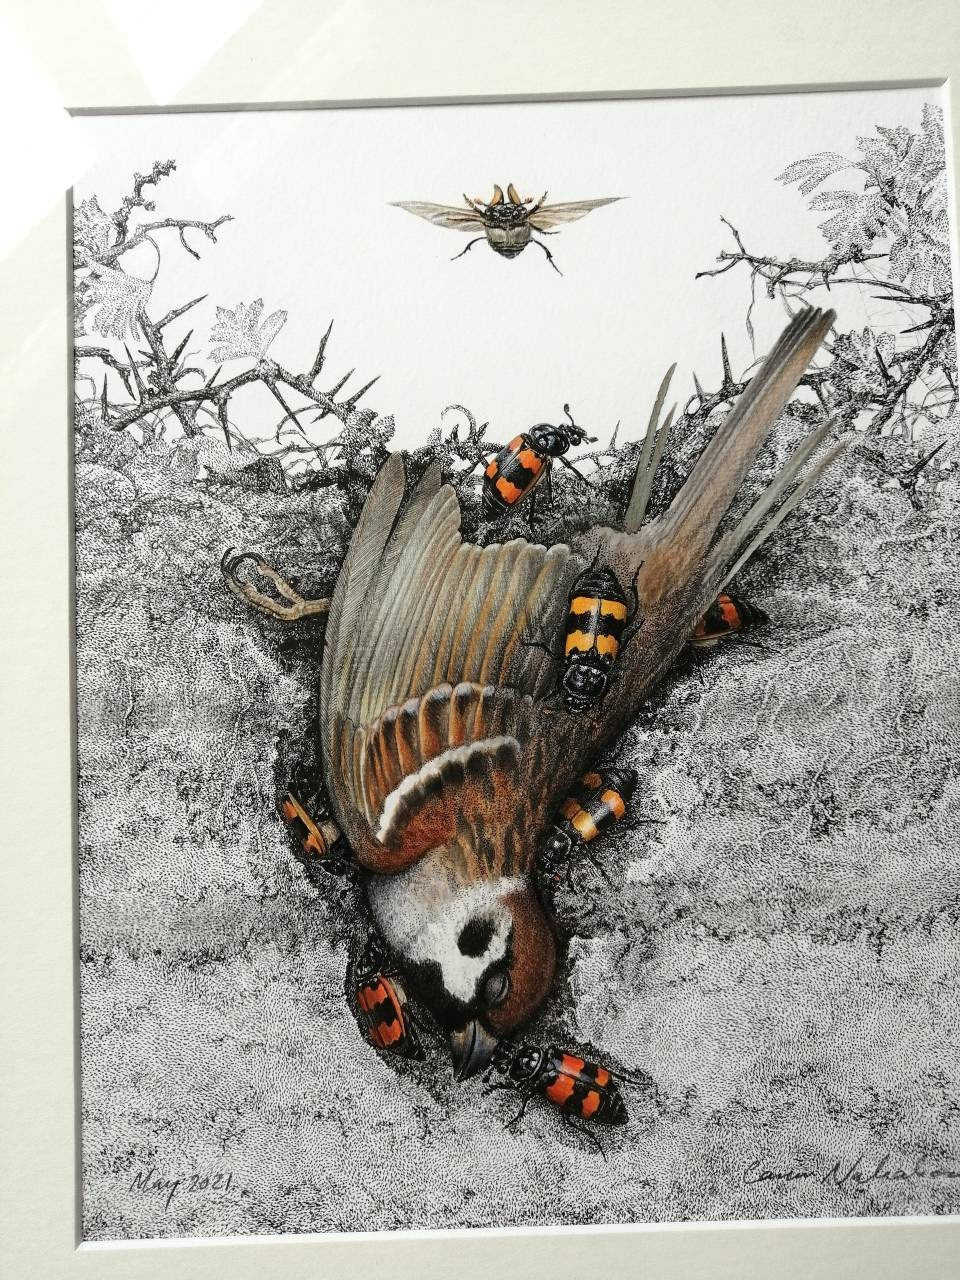 Nicrophorus & Tree Sparrow, limited edition art print 10x8inch